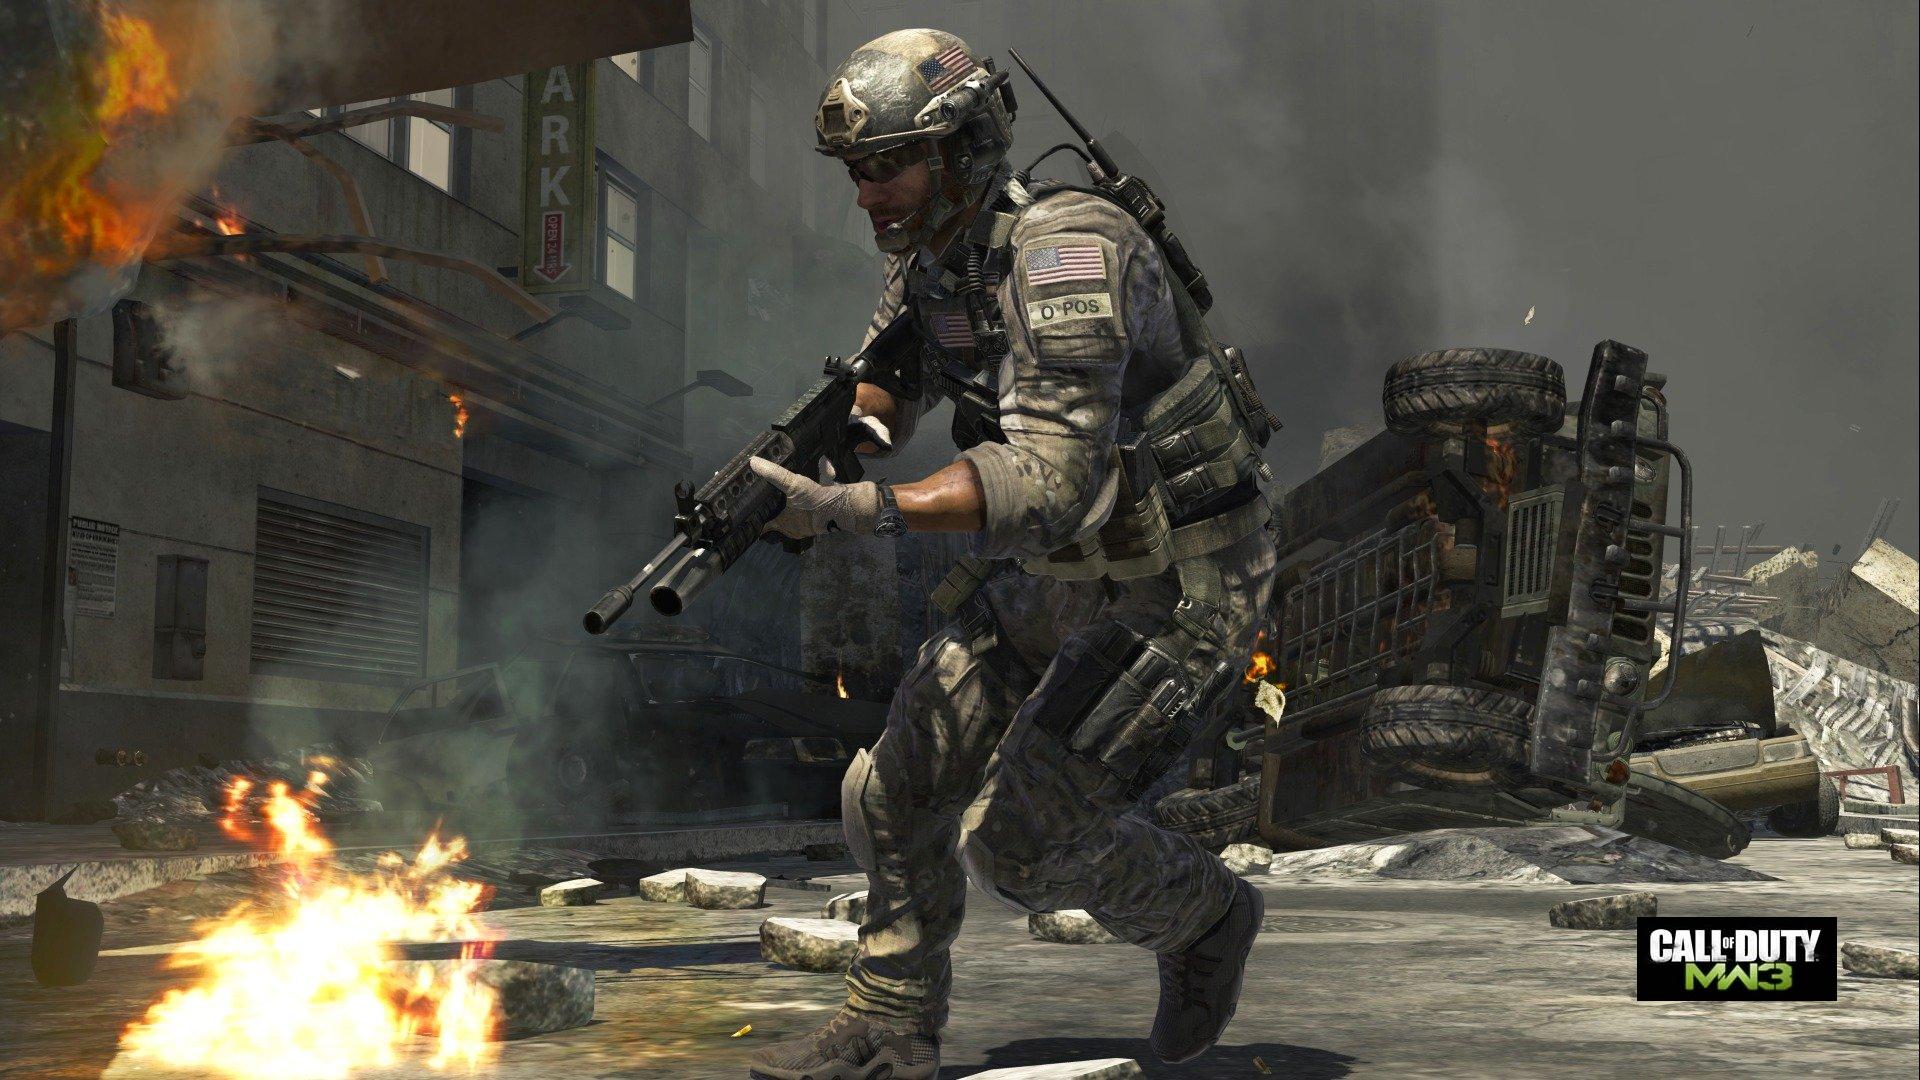 Is Call of Duty: Modern Warfare PC on Steam?